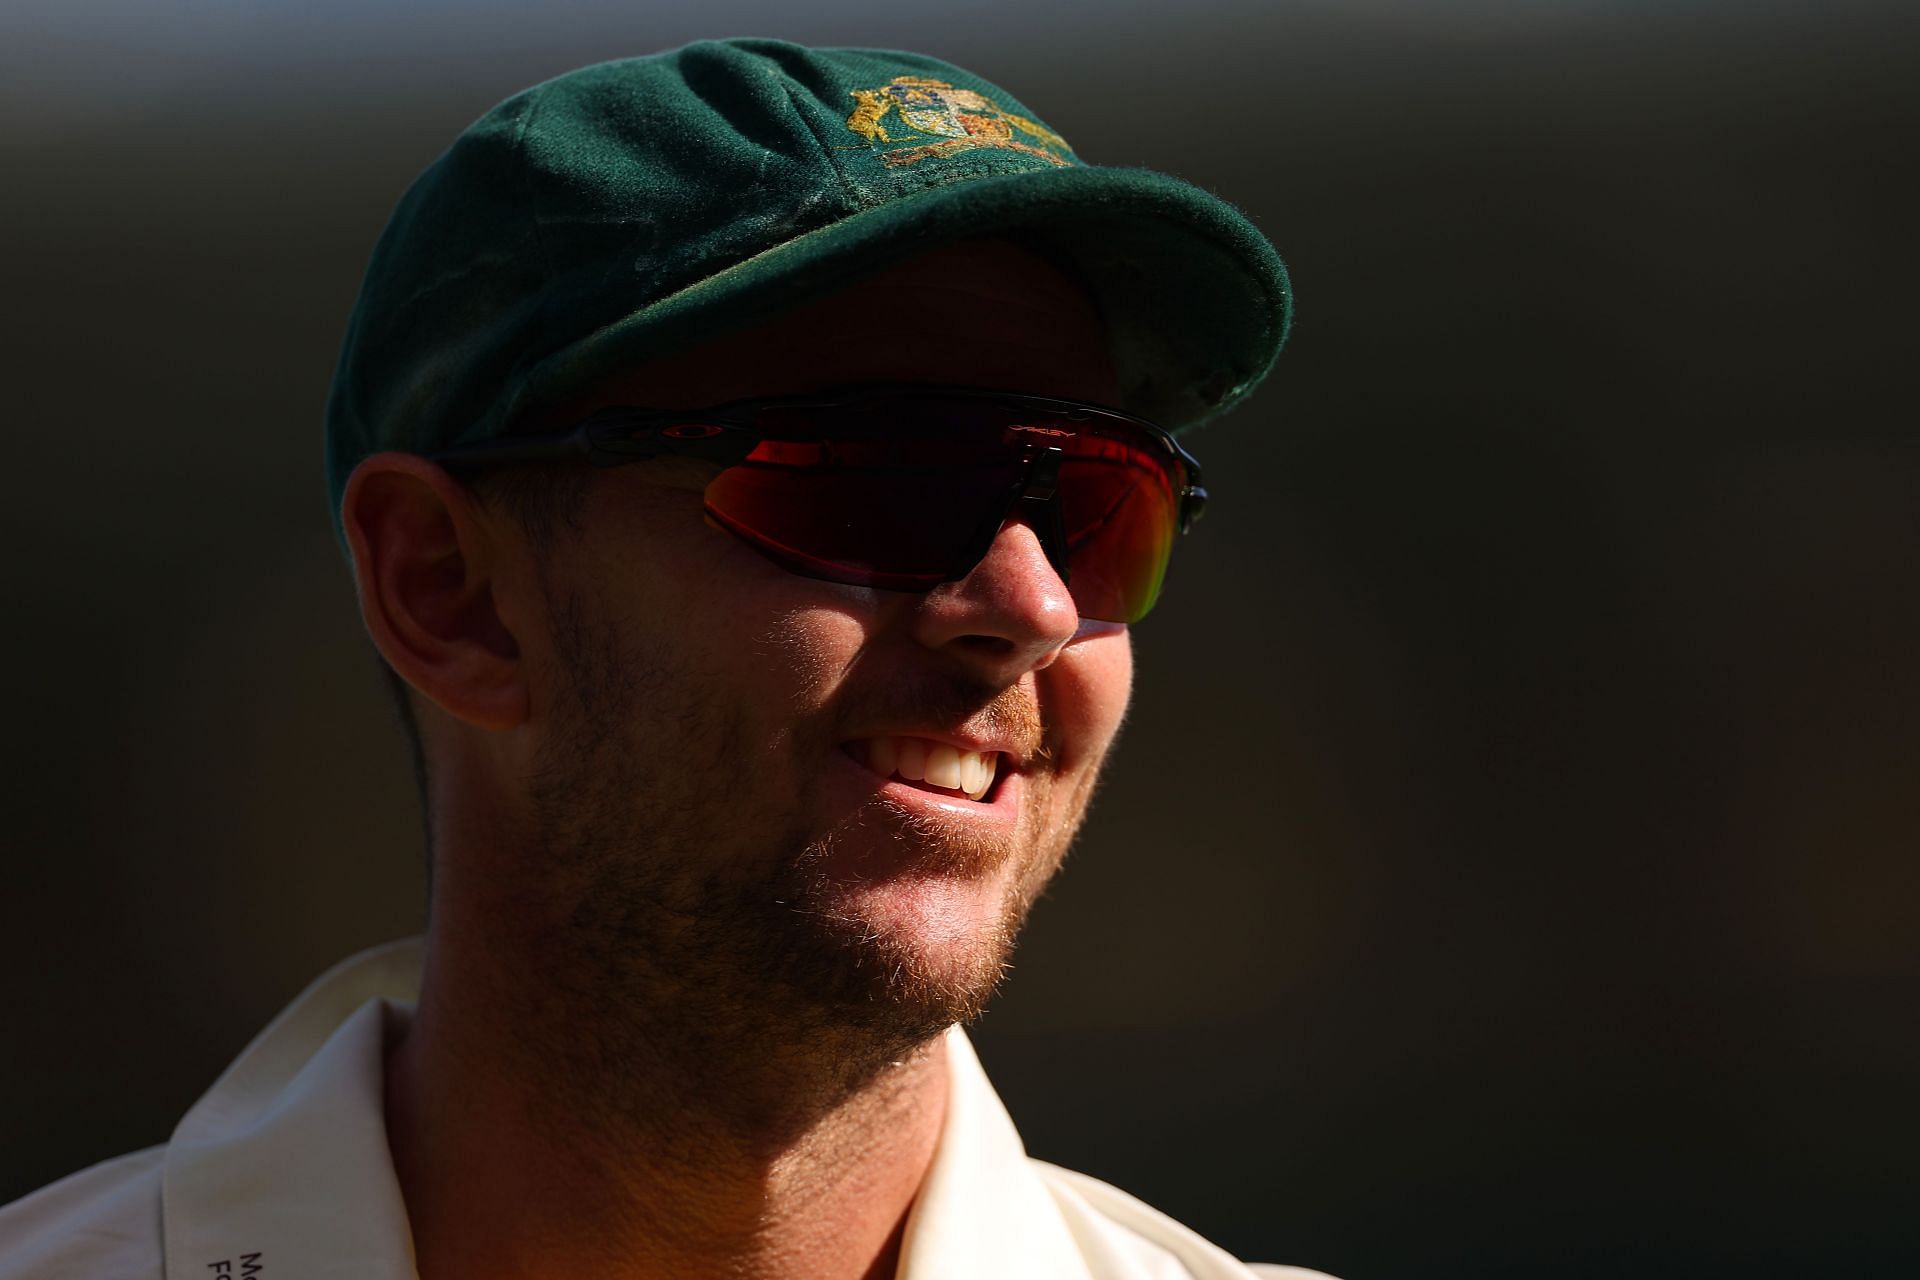 Australia v South Africa - Third Test: Day 5